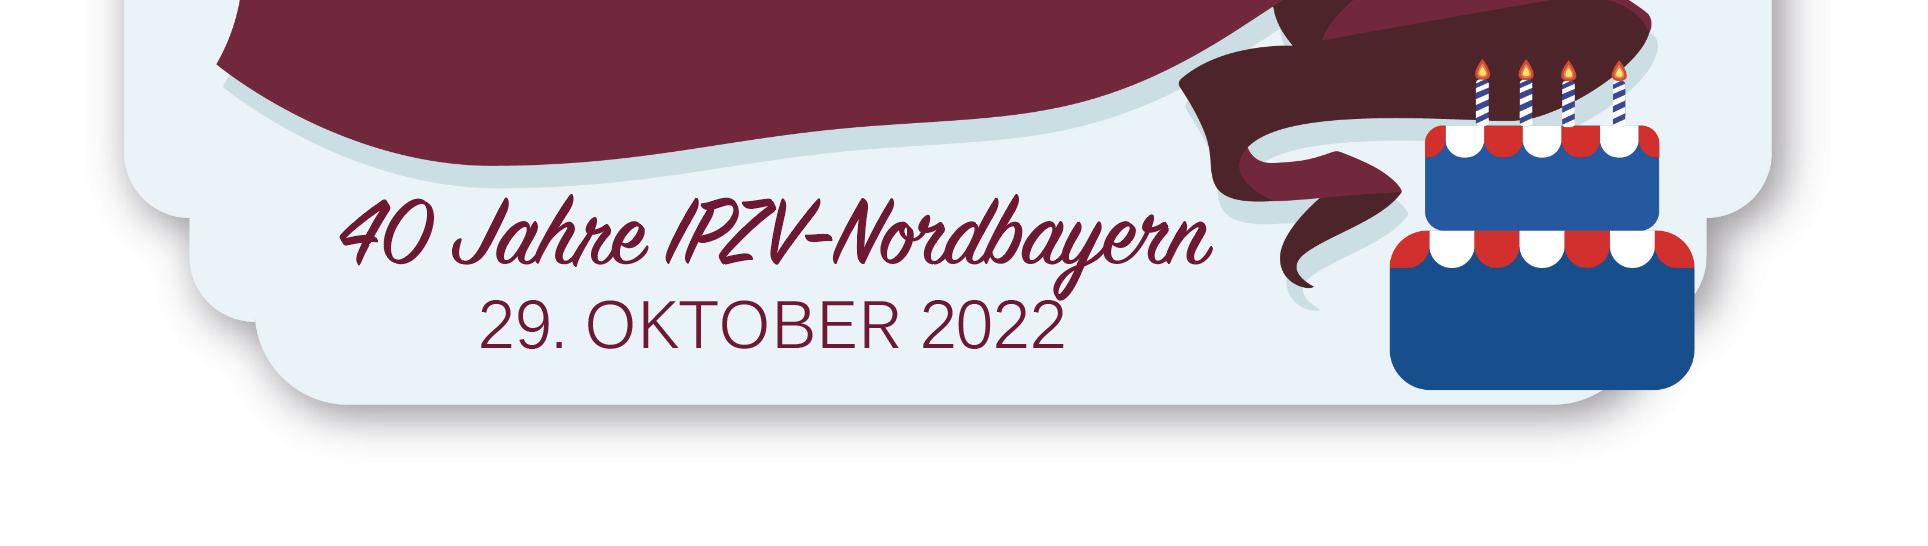 40 Jahre IPZV Nordbayern e.V. Jubiläum 2022